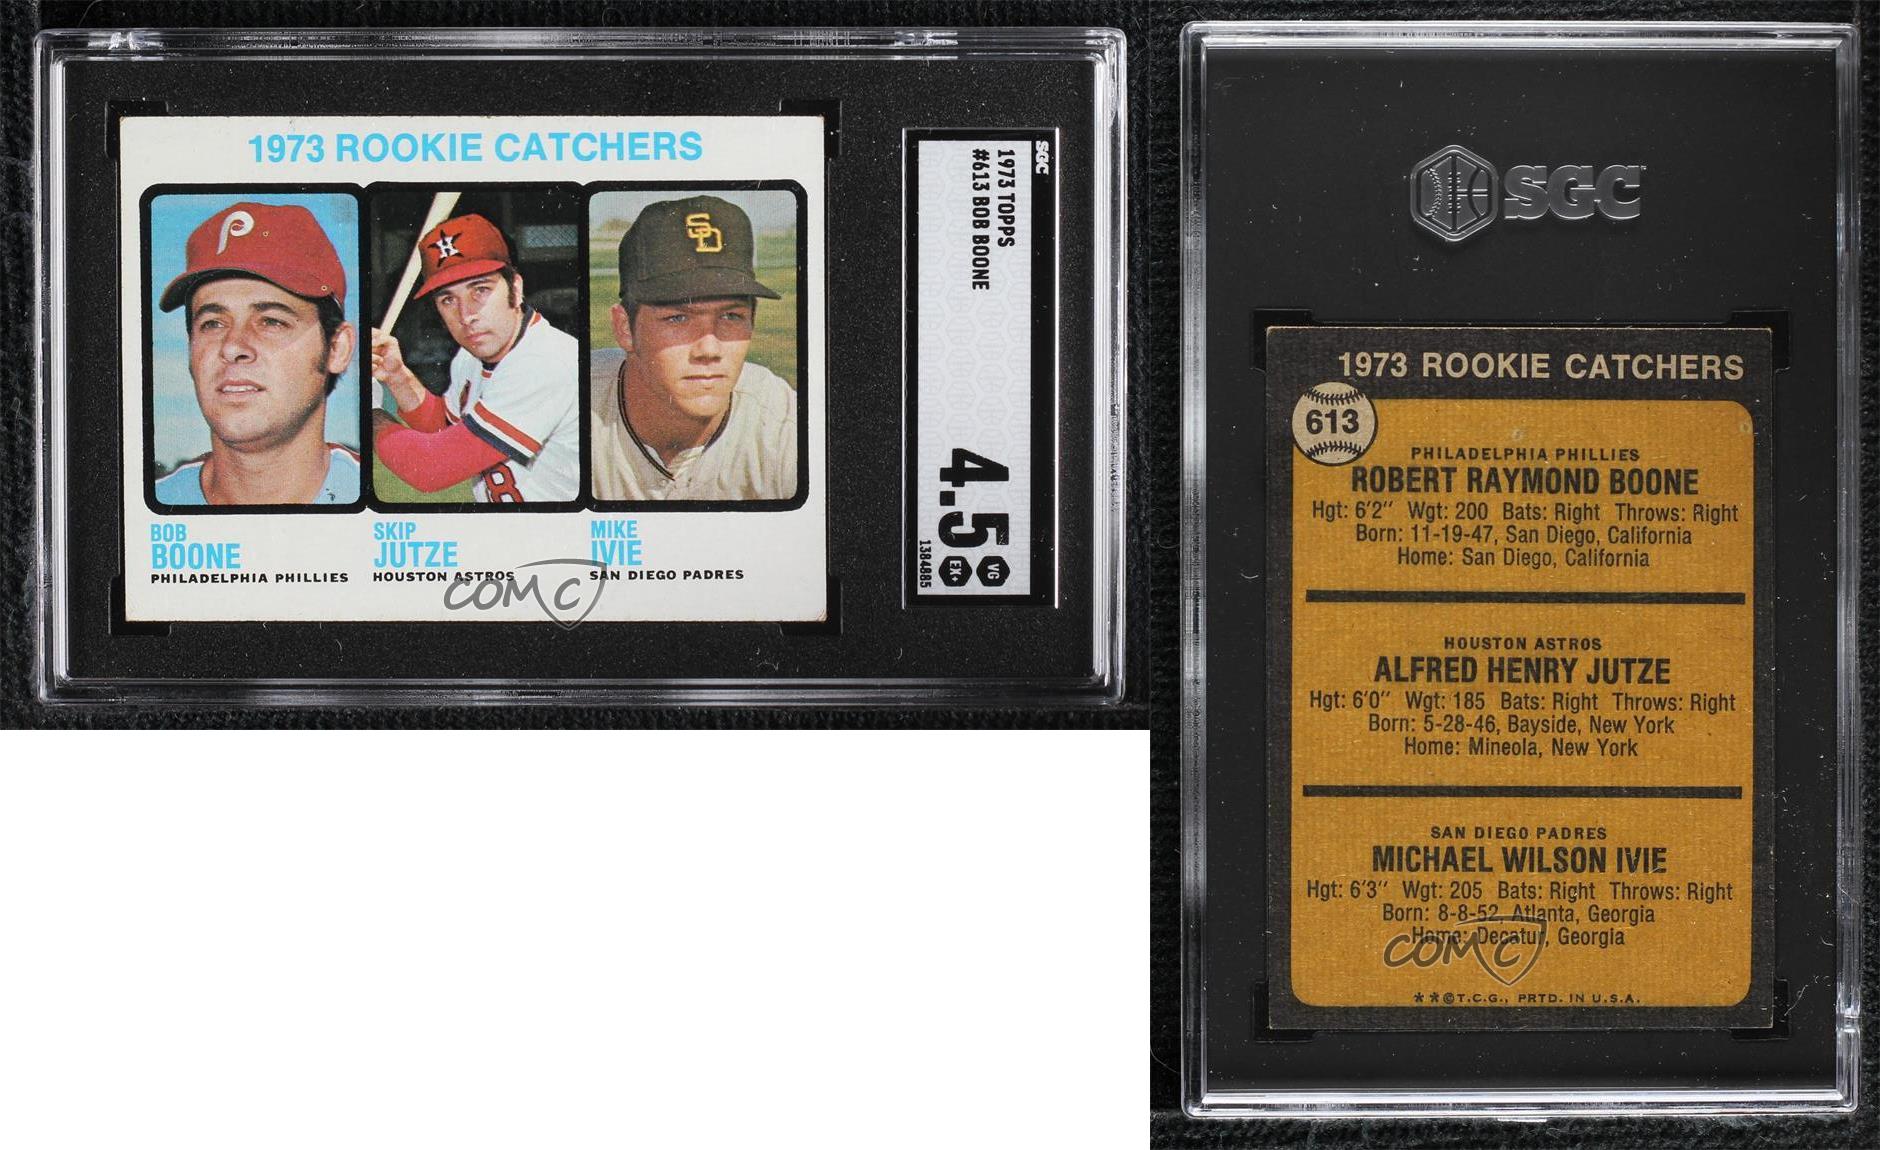 1973 Topps Rookie Catchers (Bob Boone/Skip Jutze/Mike Ivie)